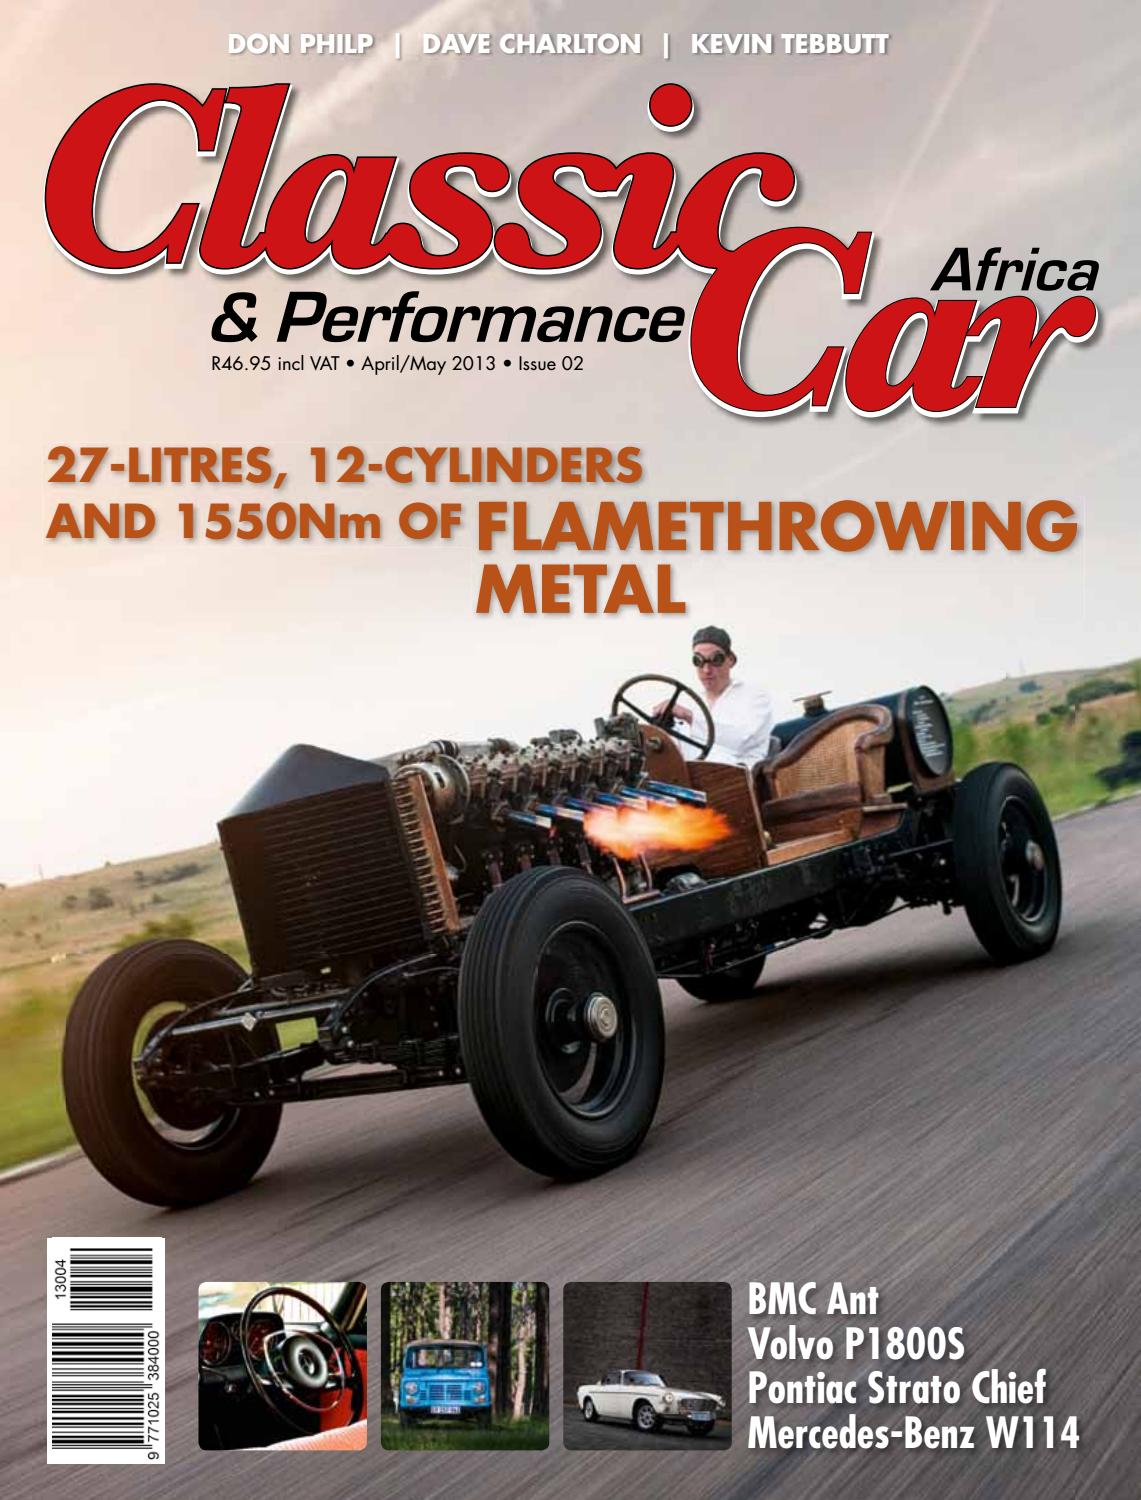 Classic Car Issue02 Terje Halvorsen Issuu inside proportions 1141 X 1500